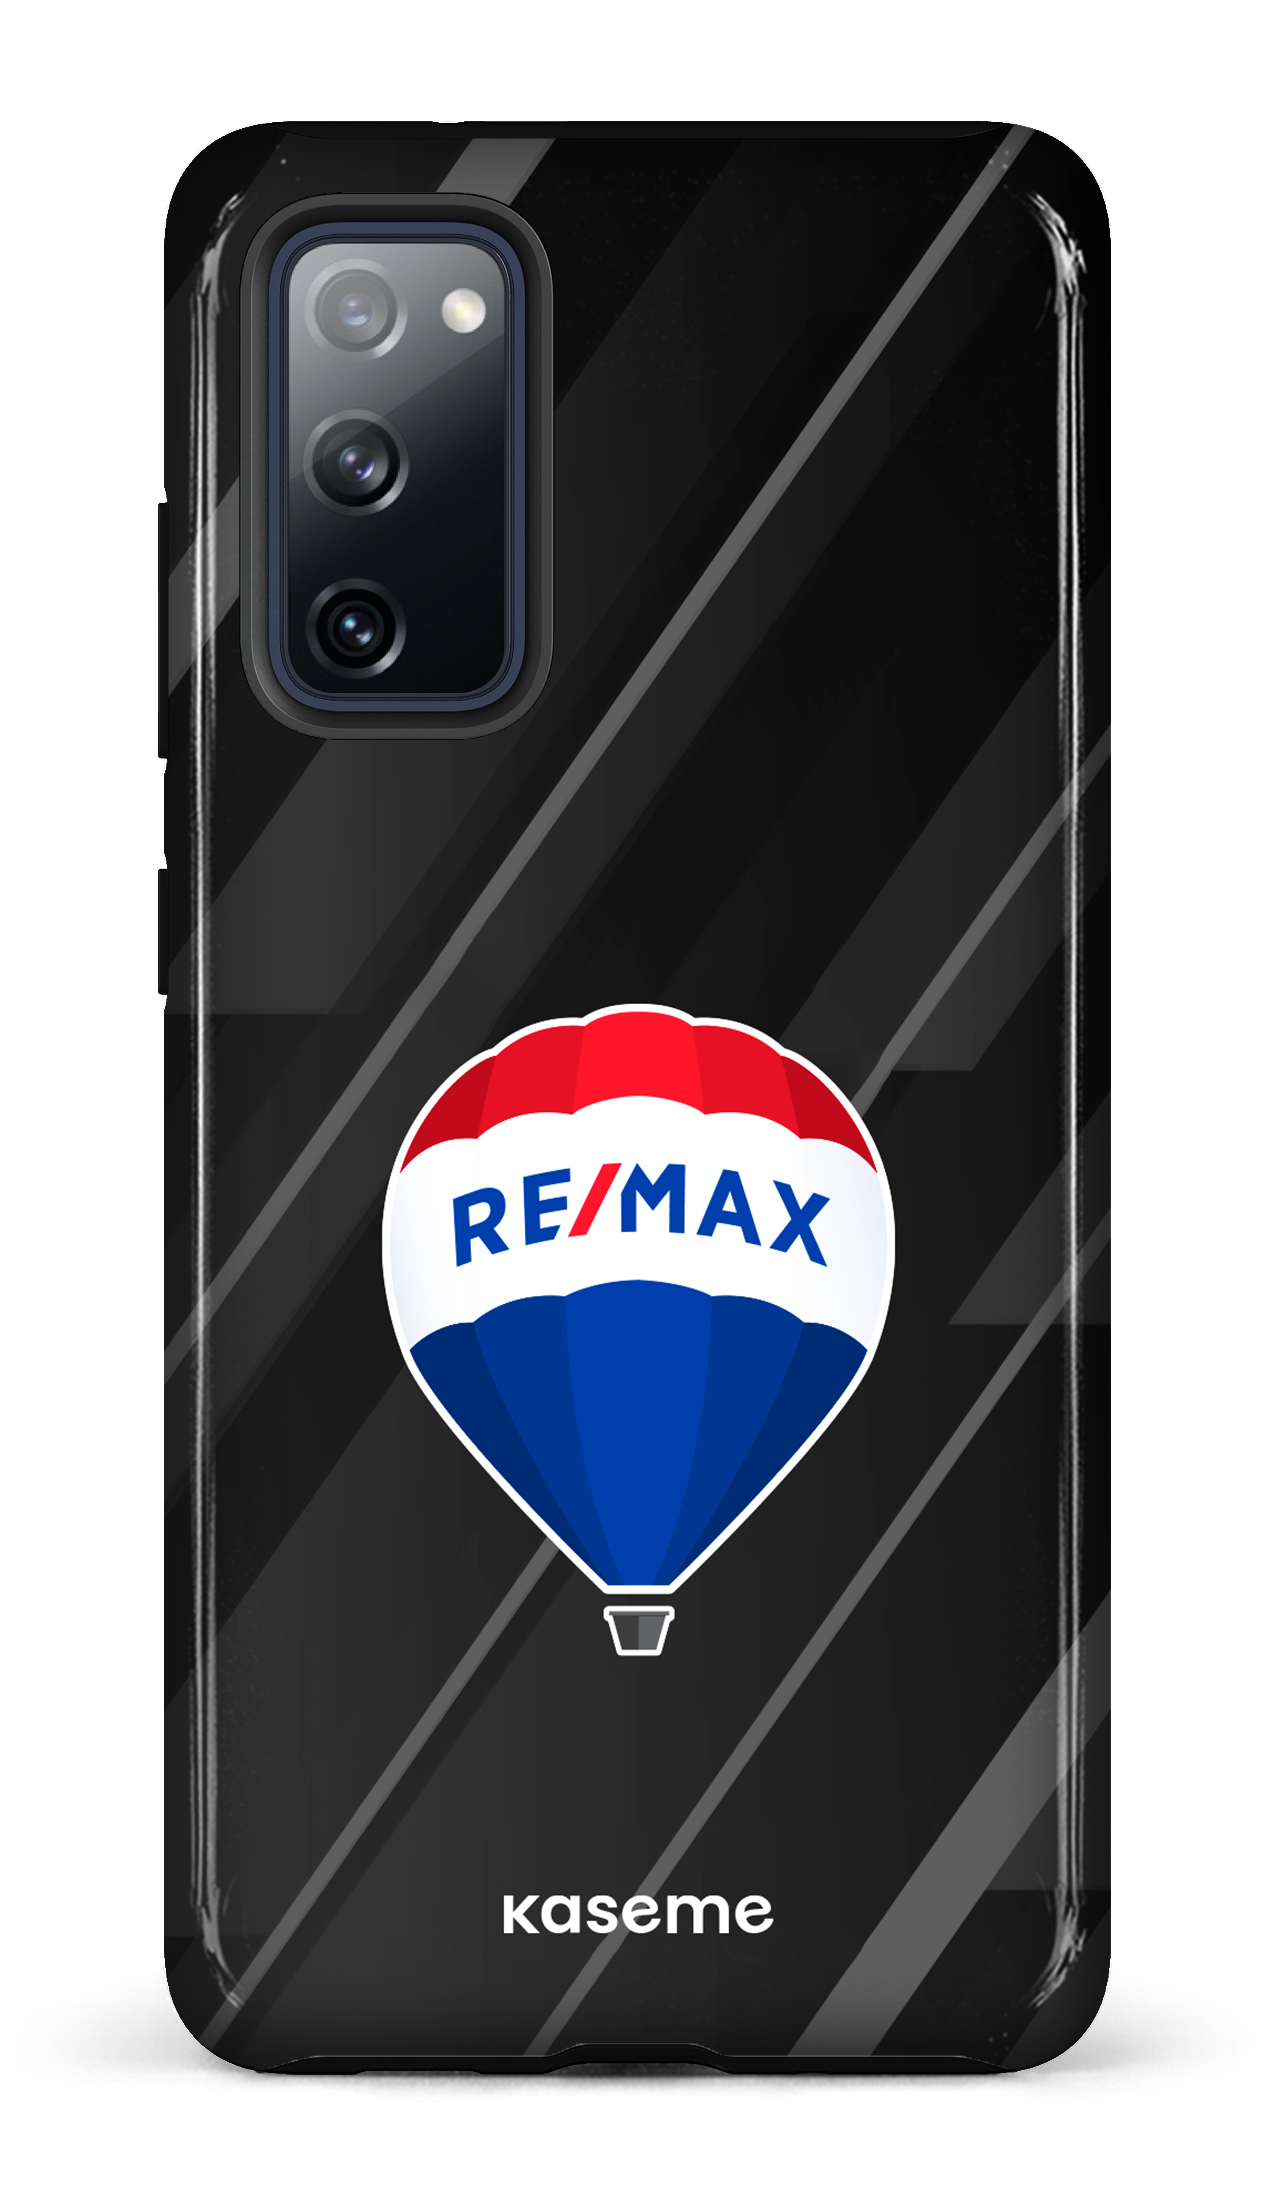 Remax Noir - Galaxy S20 FE